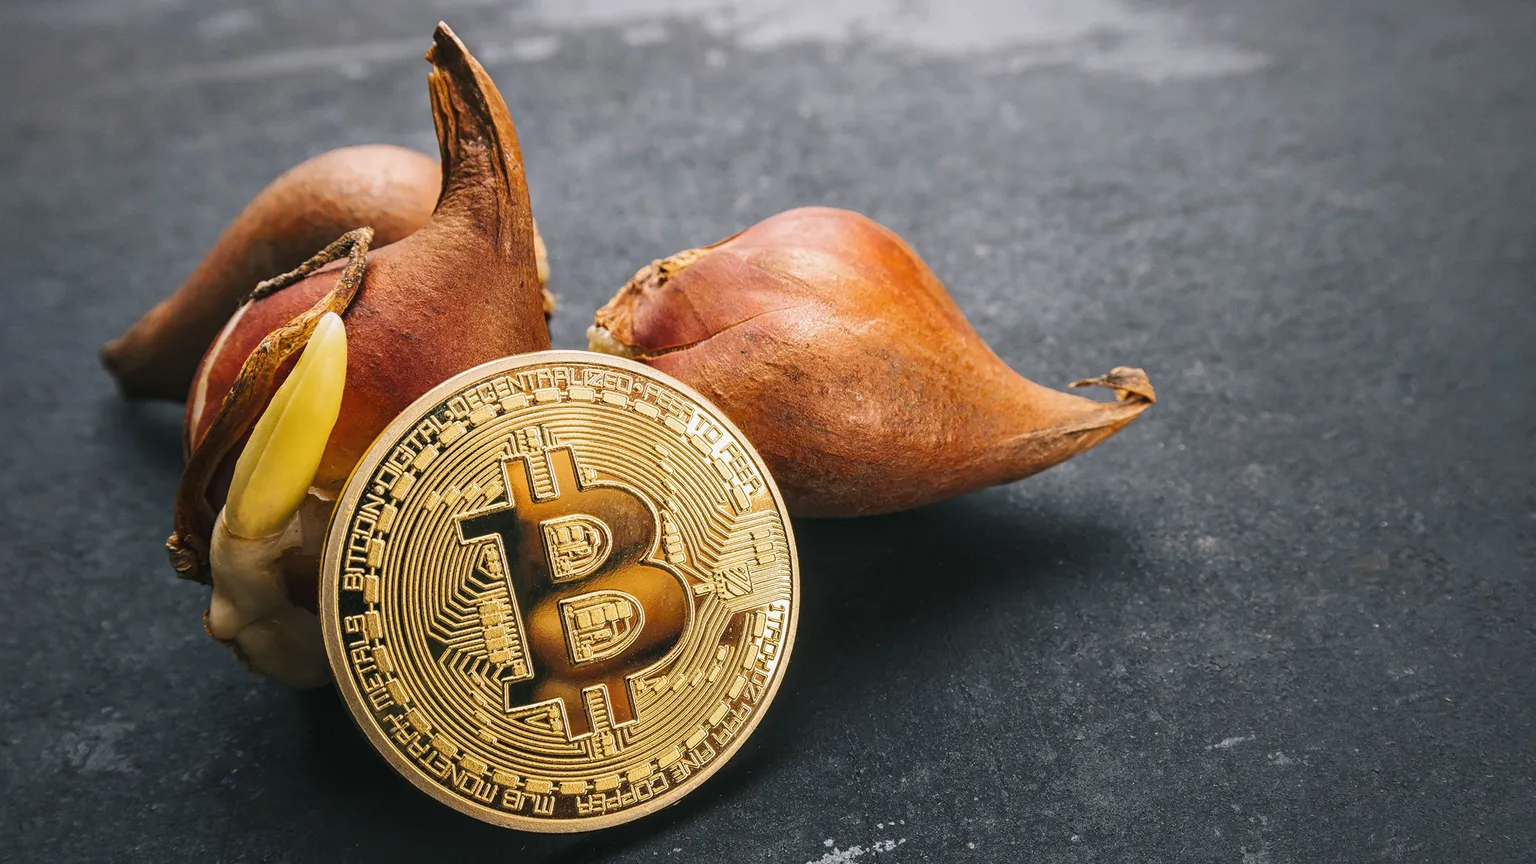 Bitcoin with tulip bulbs. Image: Shutterstock